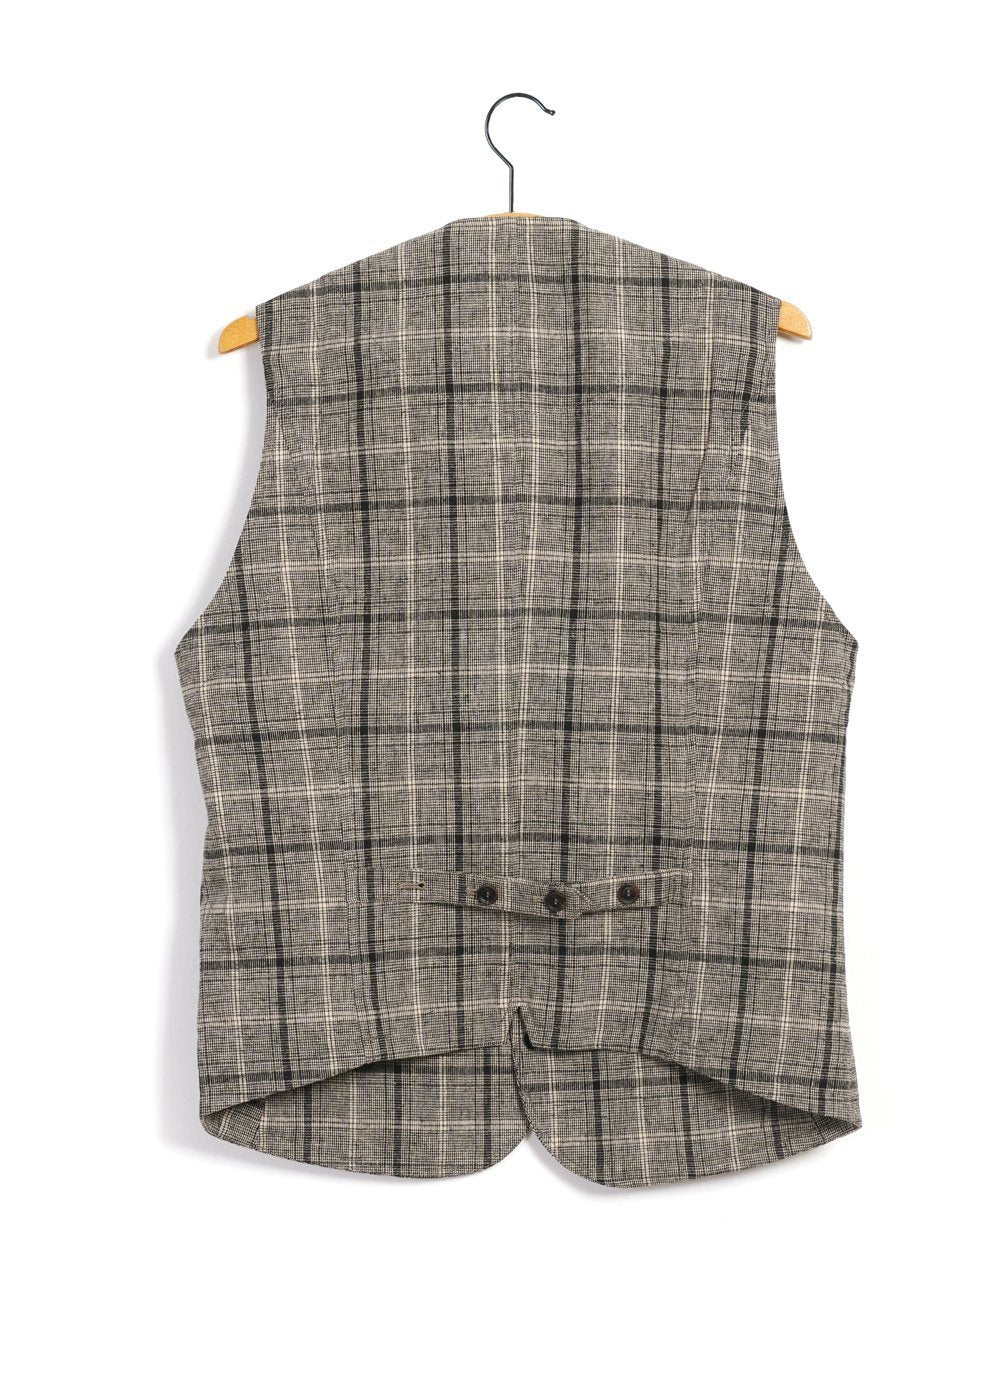 HANSEN GARMENTS - DANIEL | Four Button Waistcoat | Check 1 - HANSEN Garments